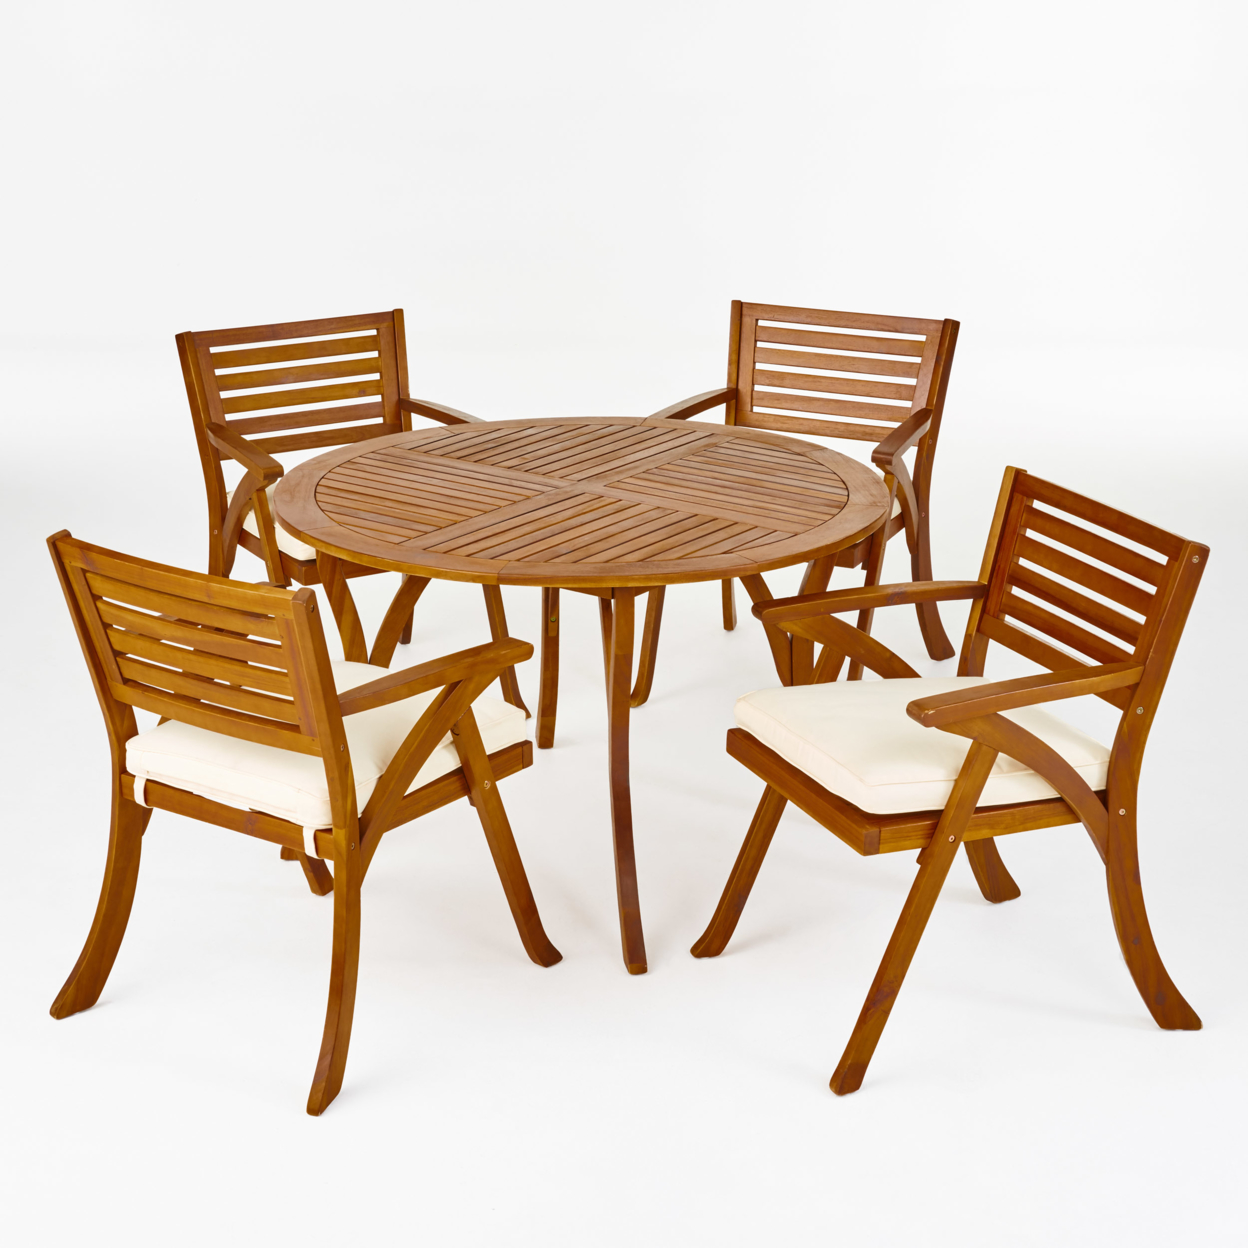 Salome Outdoor 4 Seater Acacia Wood Circular Dining Set With Cushions - Teak Finish + Cream